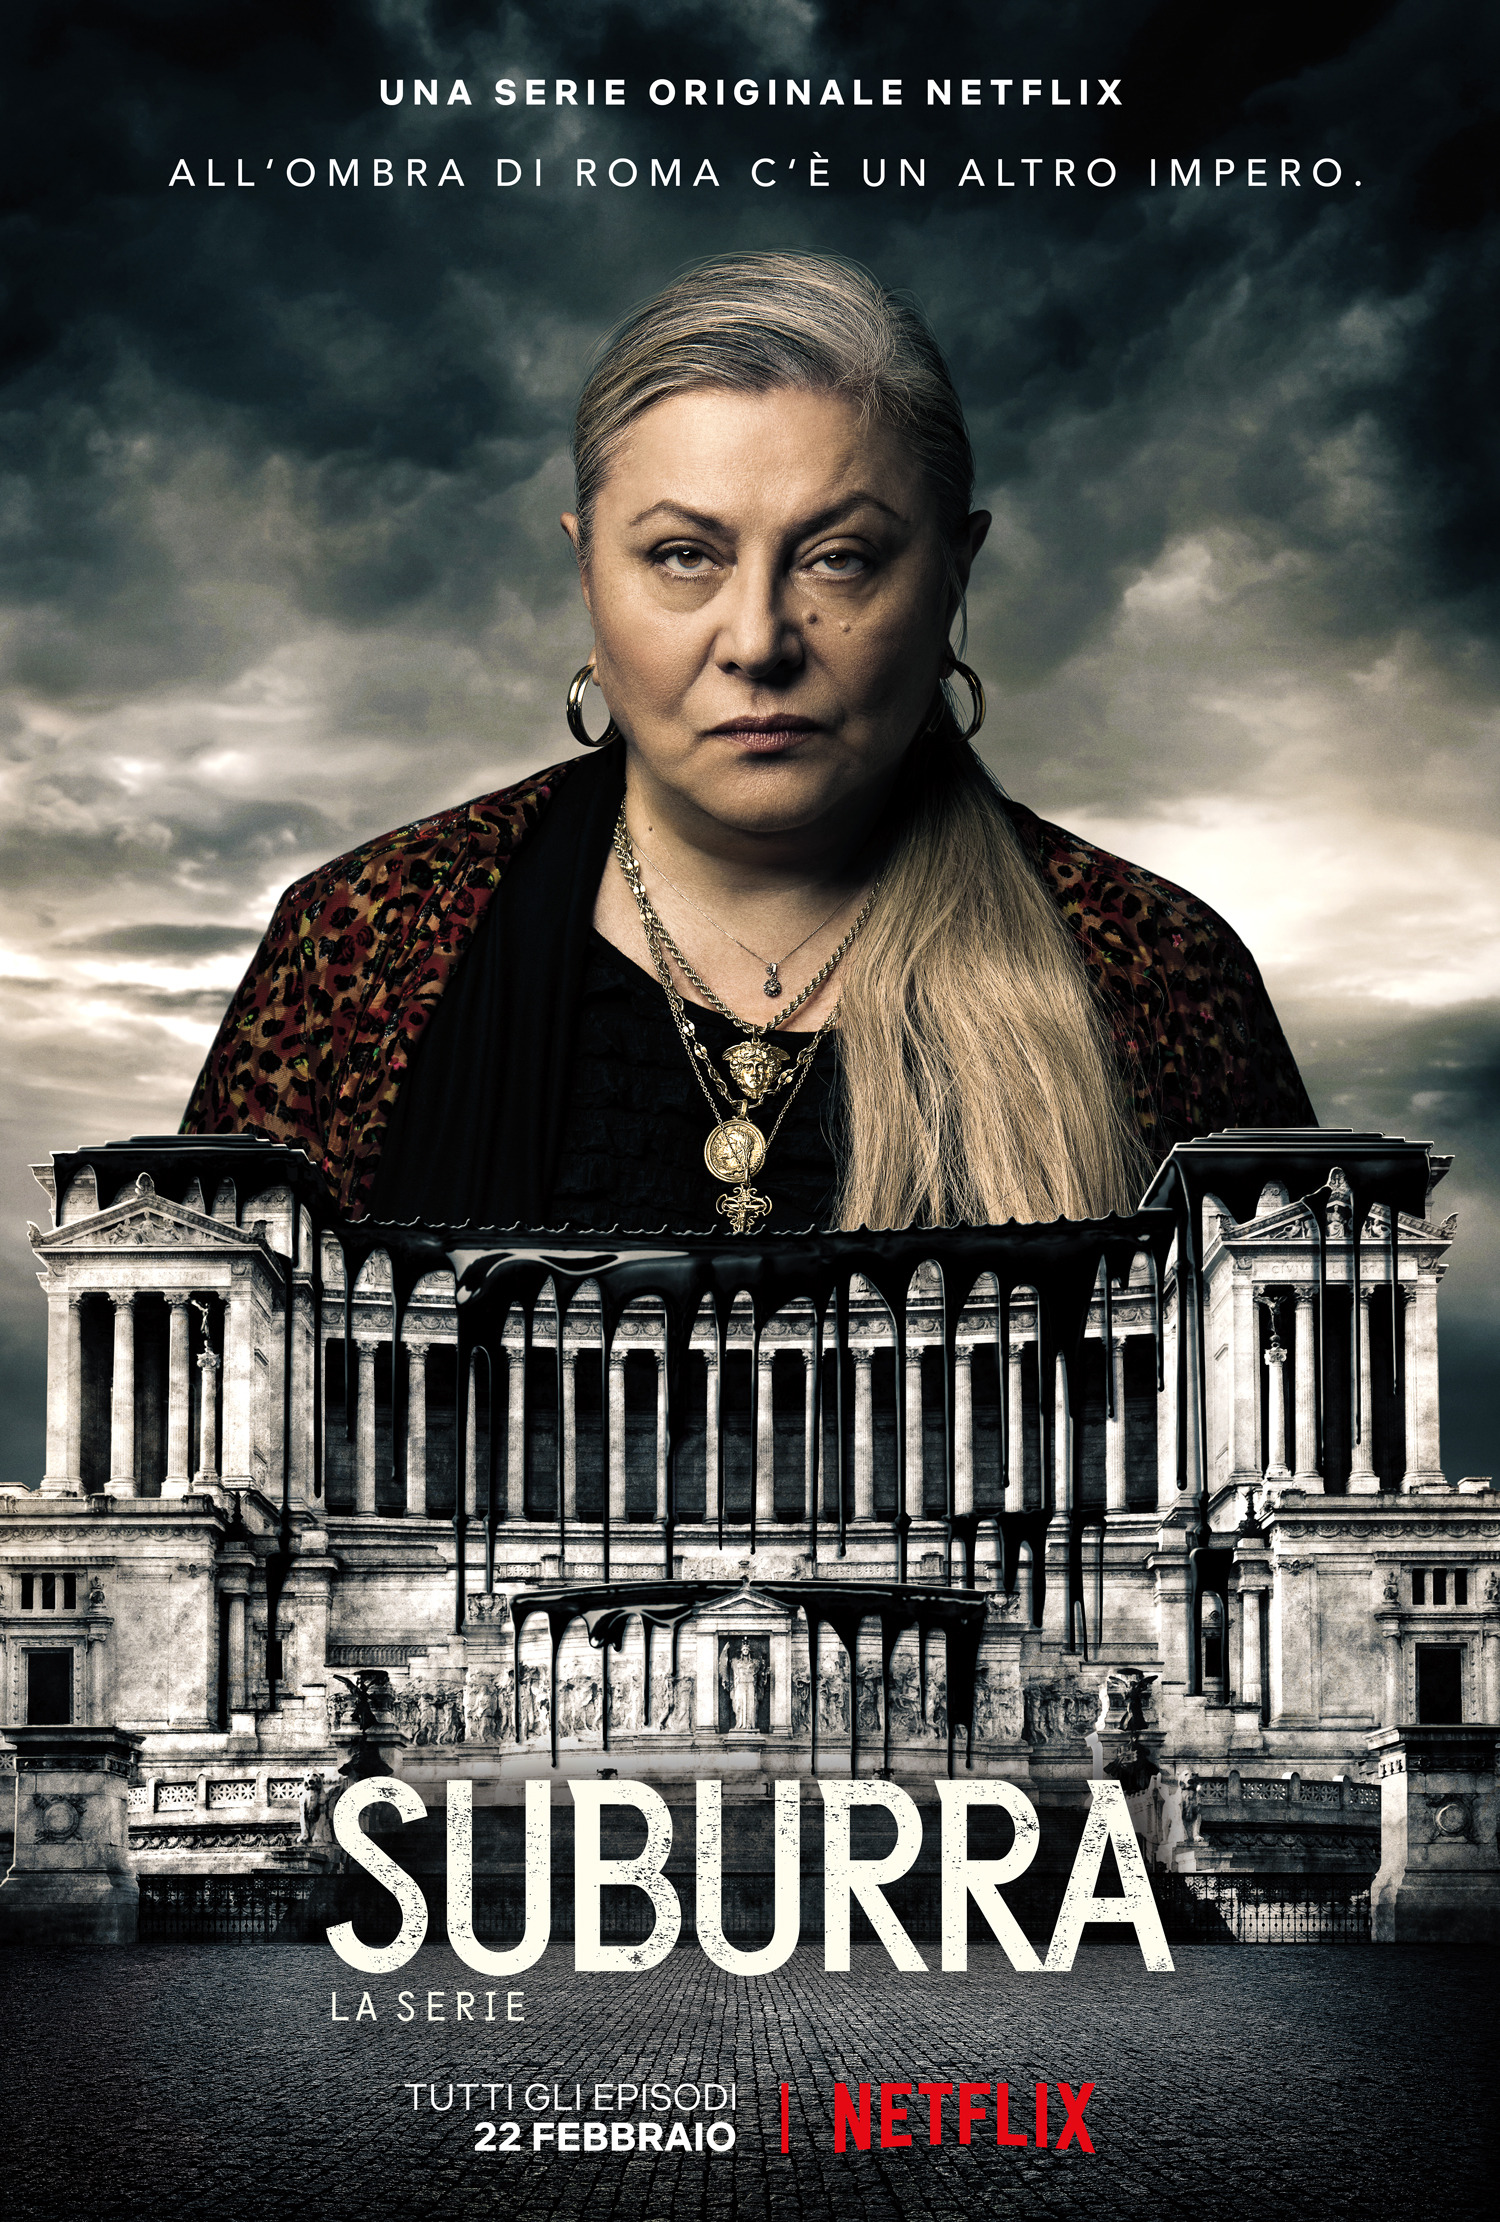 Mega Sized TV Poster Image for Suburra: la serie (#4 of 12)